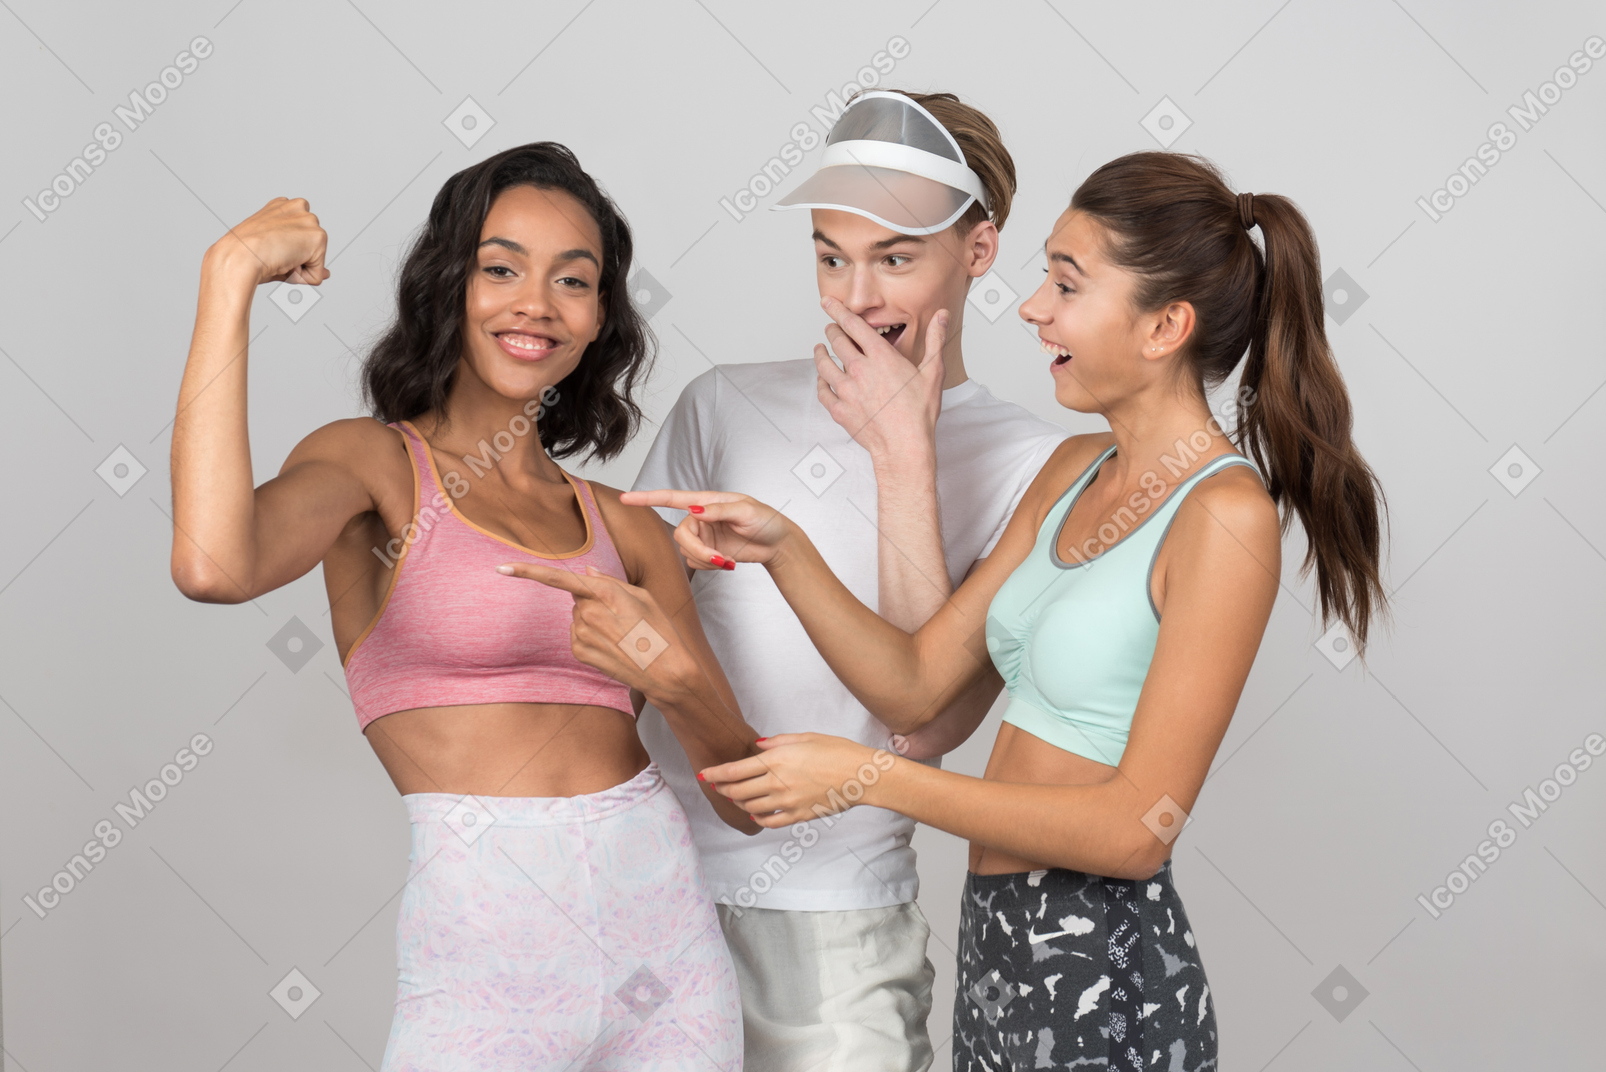 Garota e cara verificando o músculo do amigo